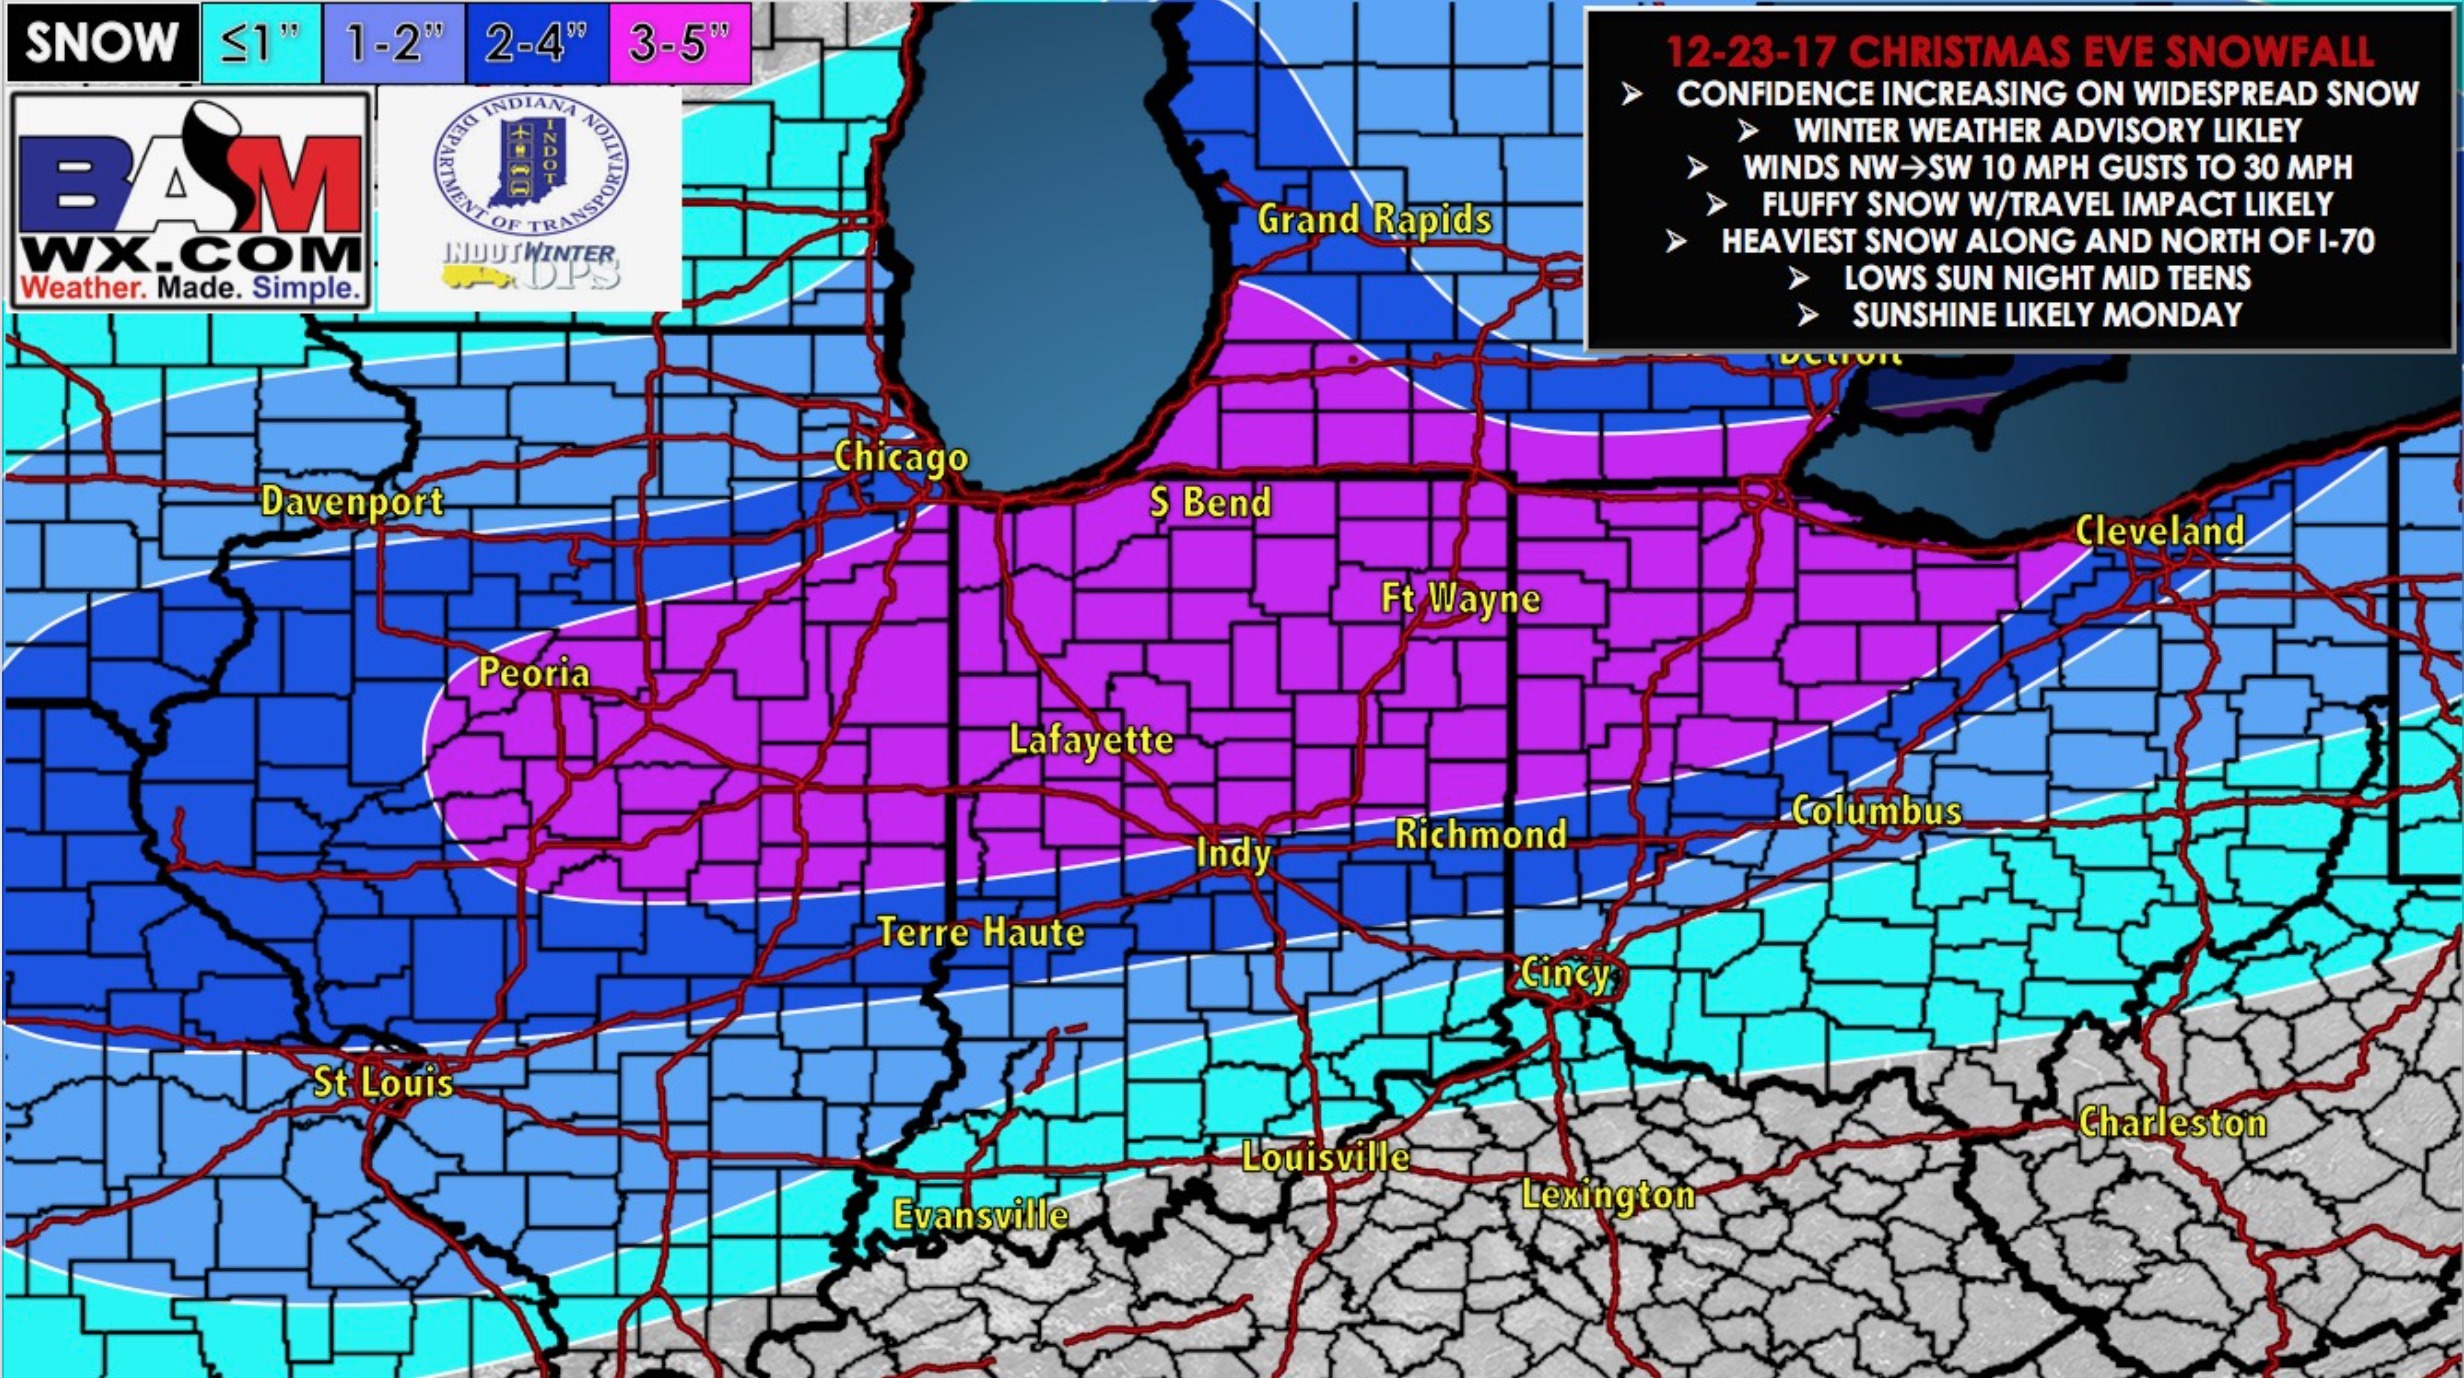 12-23-17 Ohio: Increasing confidence of Christmas Eve snowfall accumulation! B.